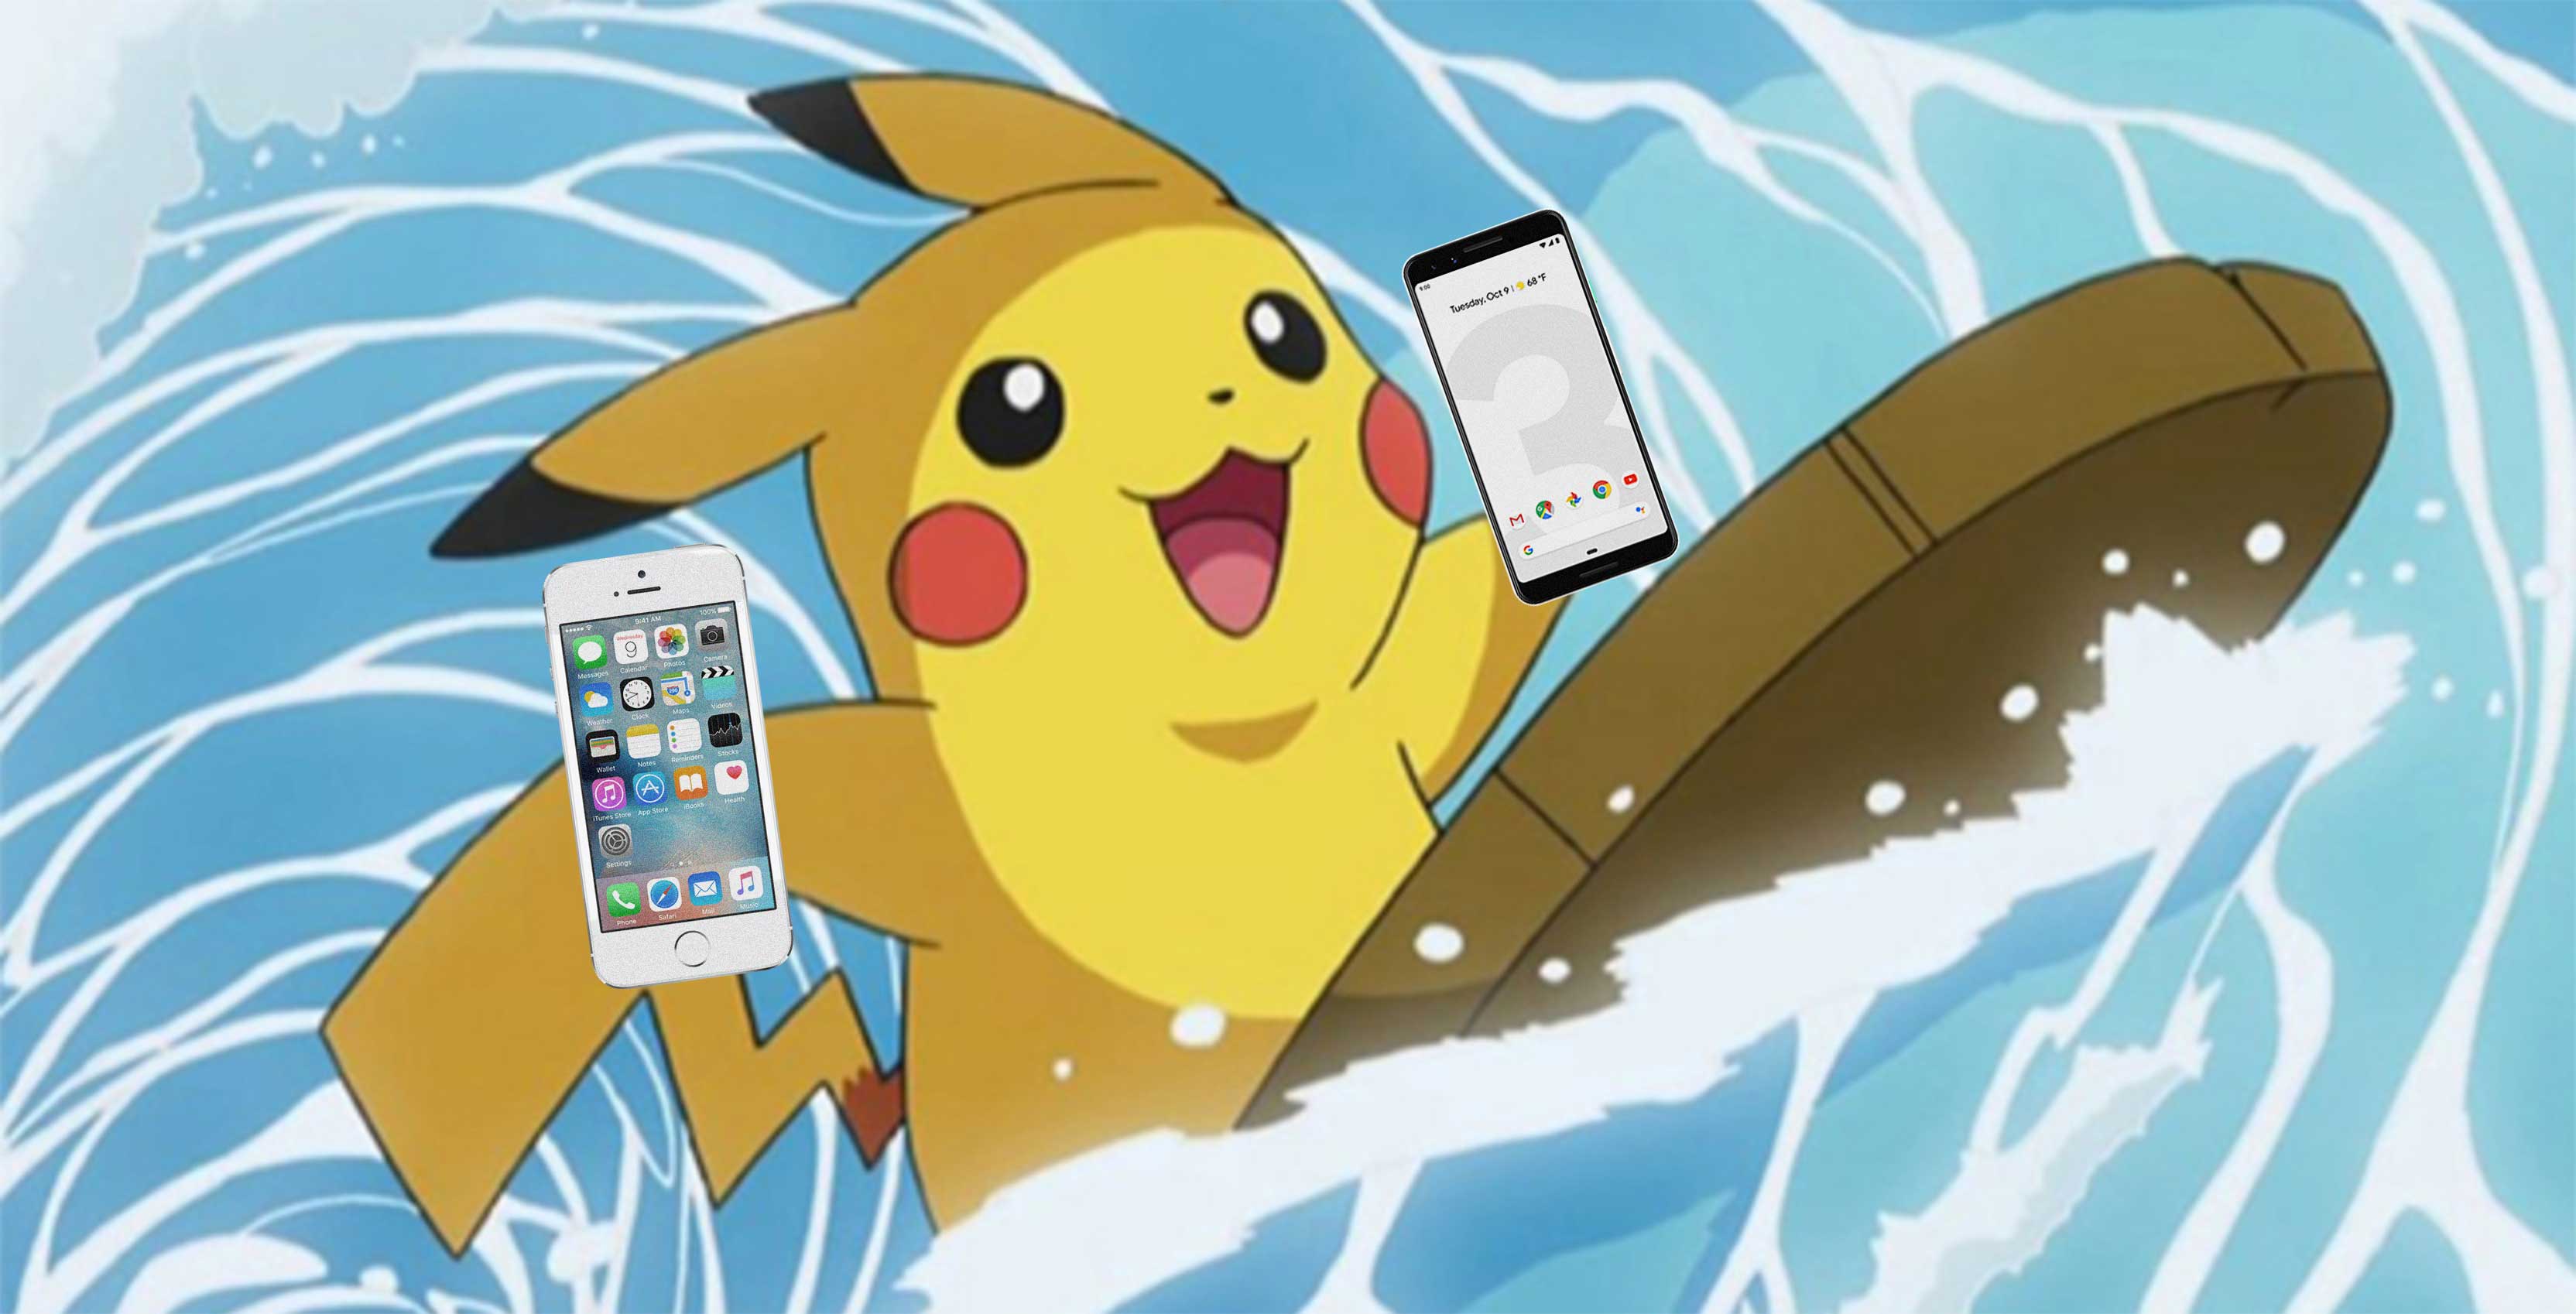 A new Pokémon mobile game is on the horizon